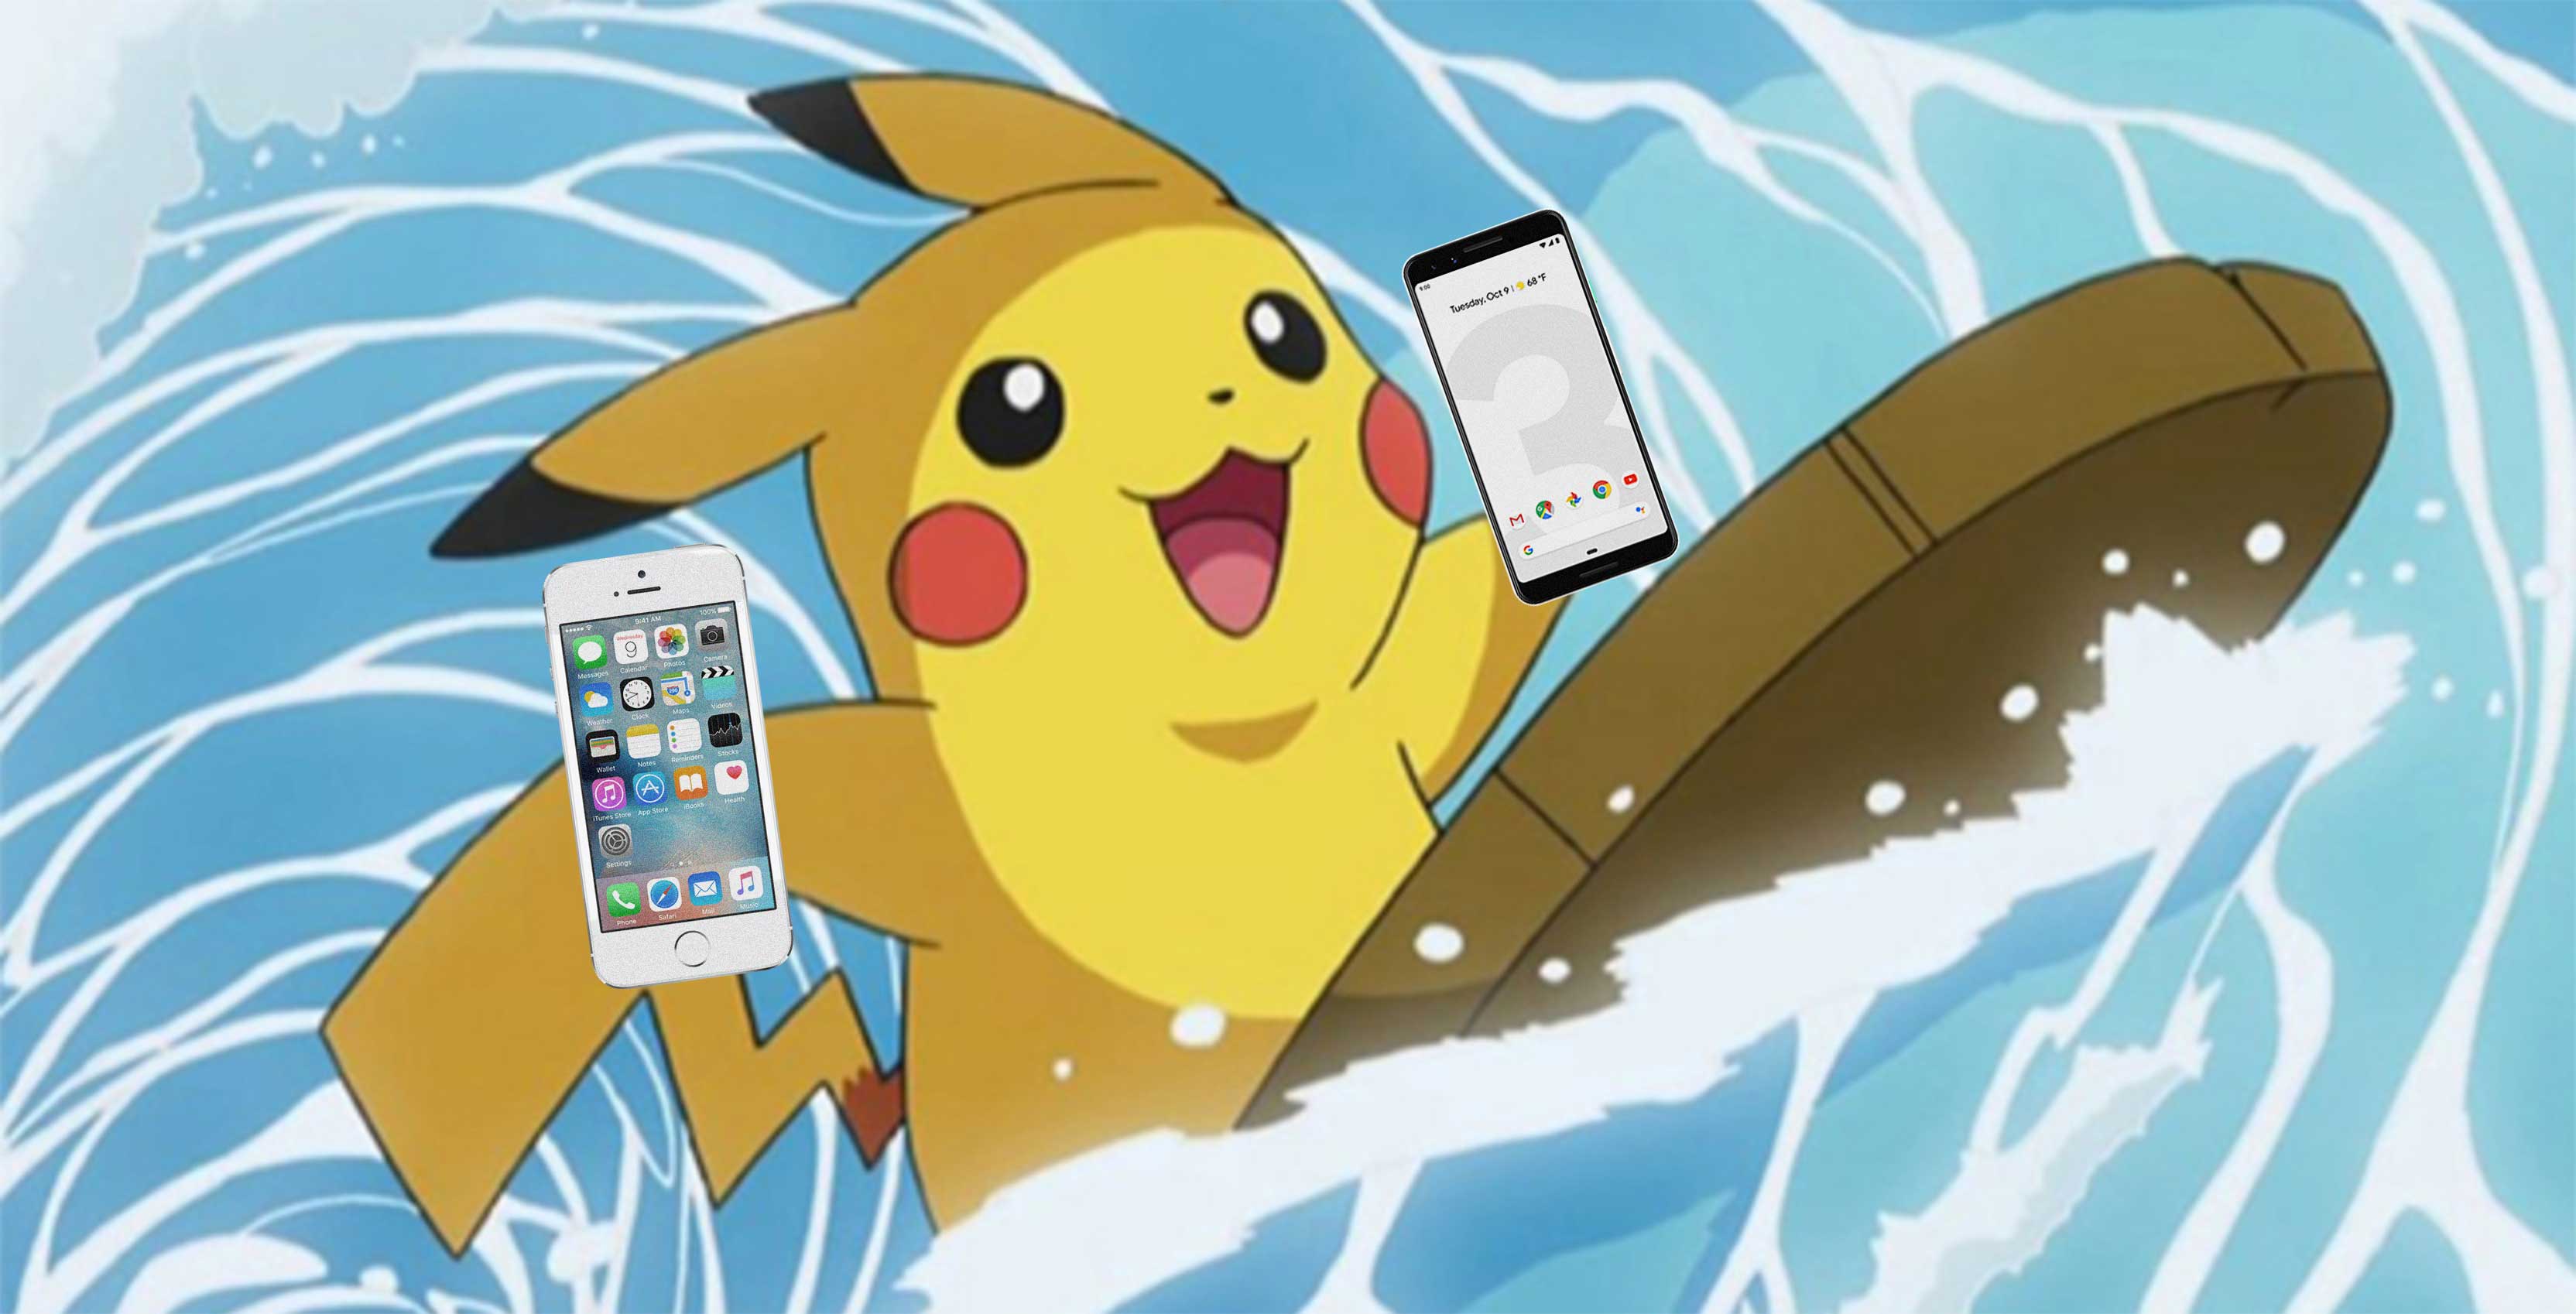 A new Pokémon mobile game is on the horizon